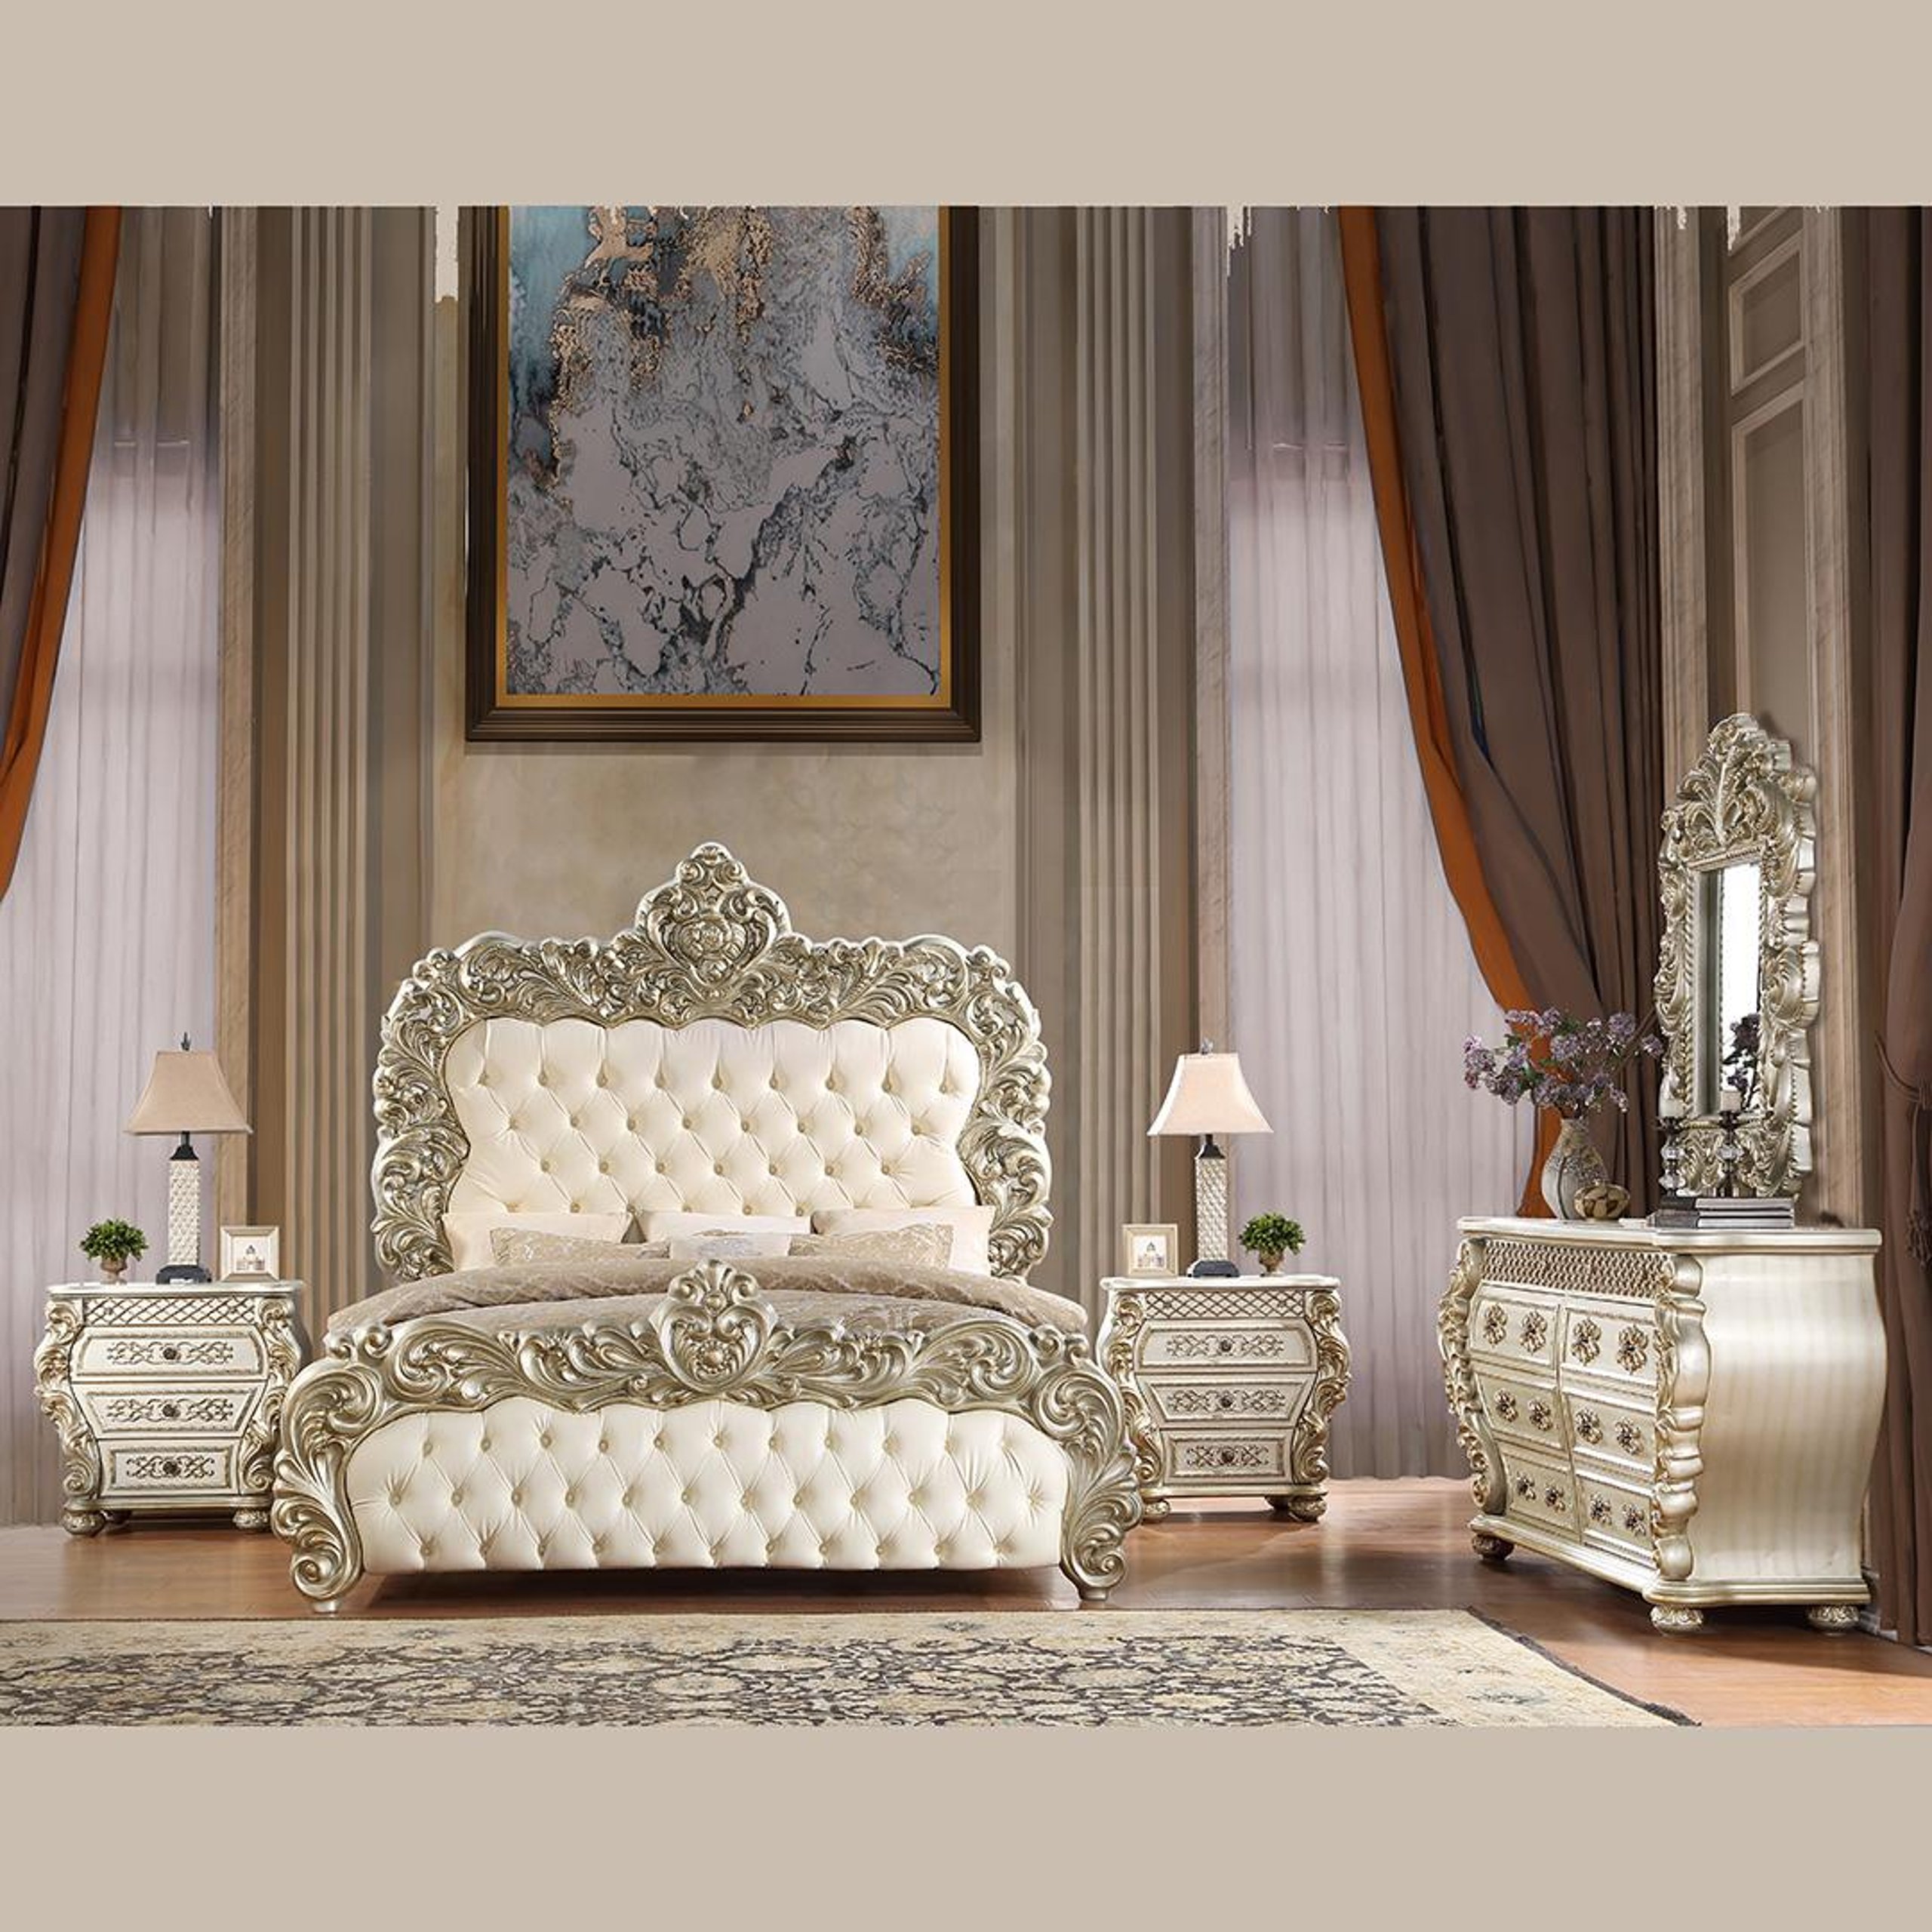 Baroque Rich Gold Cal King Bedroom Set 3pcs Carved Wood Homey Design Hd 8086 Buy Online On Ny 